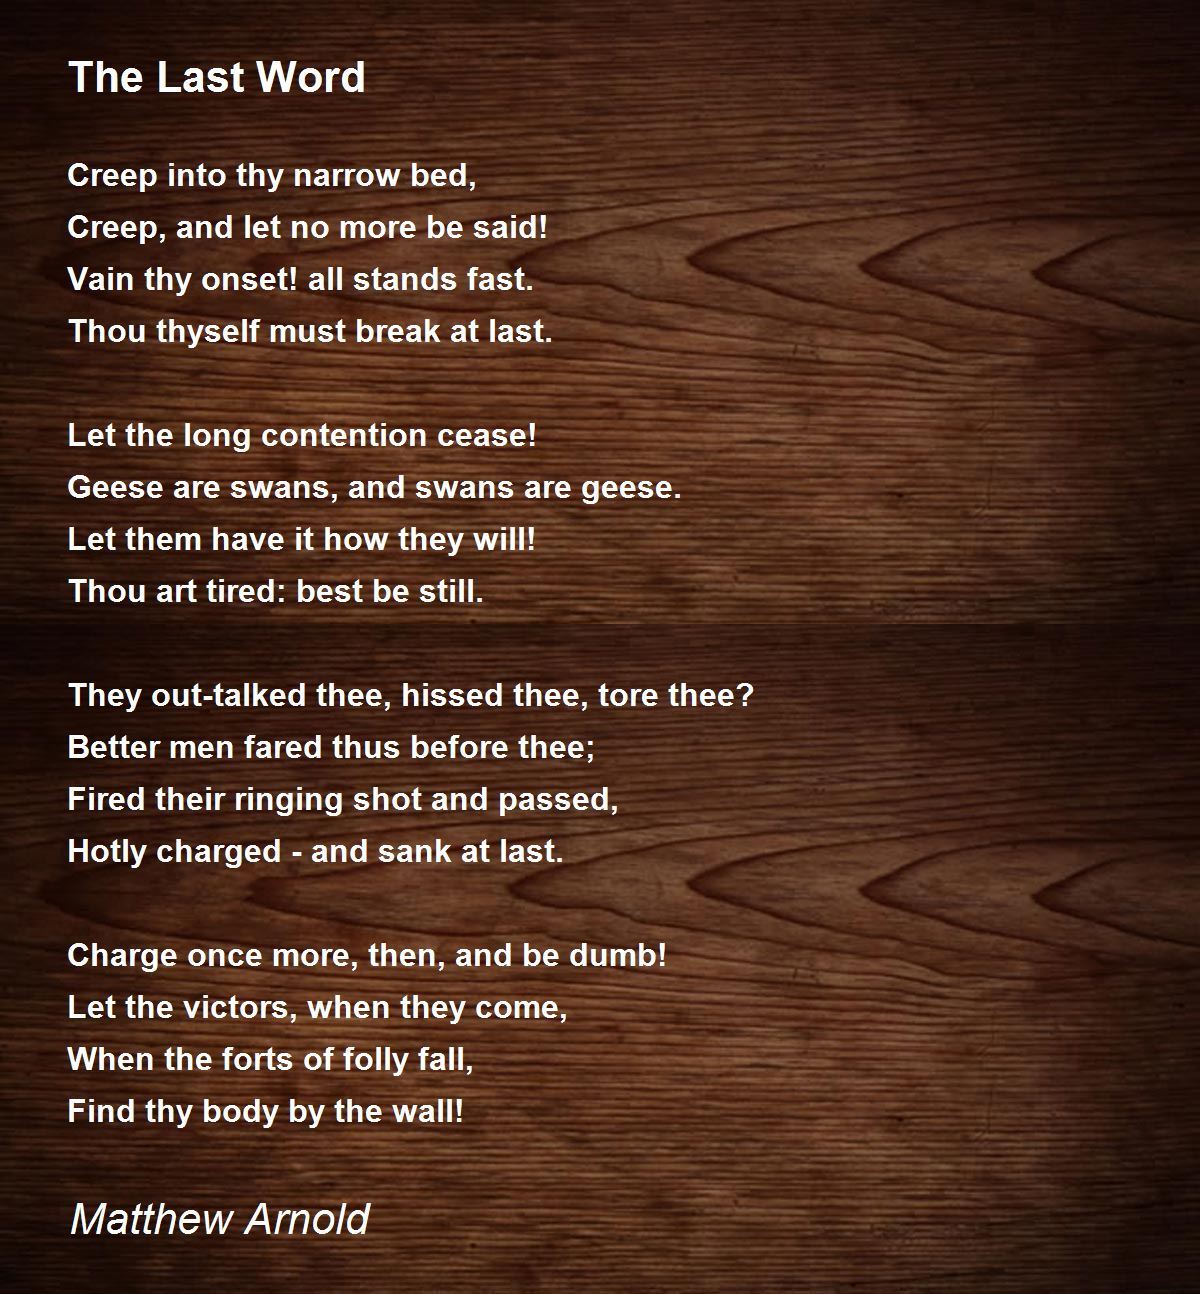 The Last Word Poem by Matthew Arnold - Poem Hunter